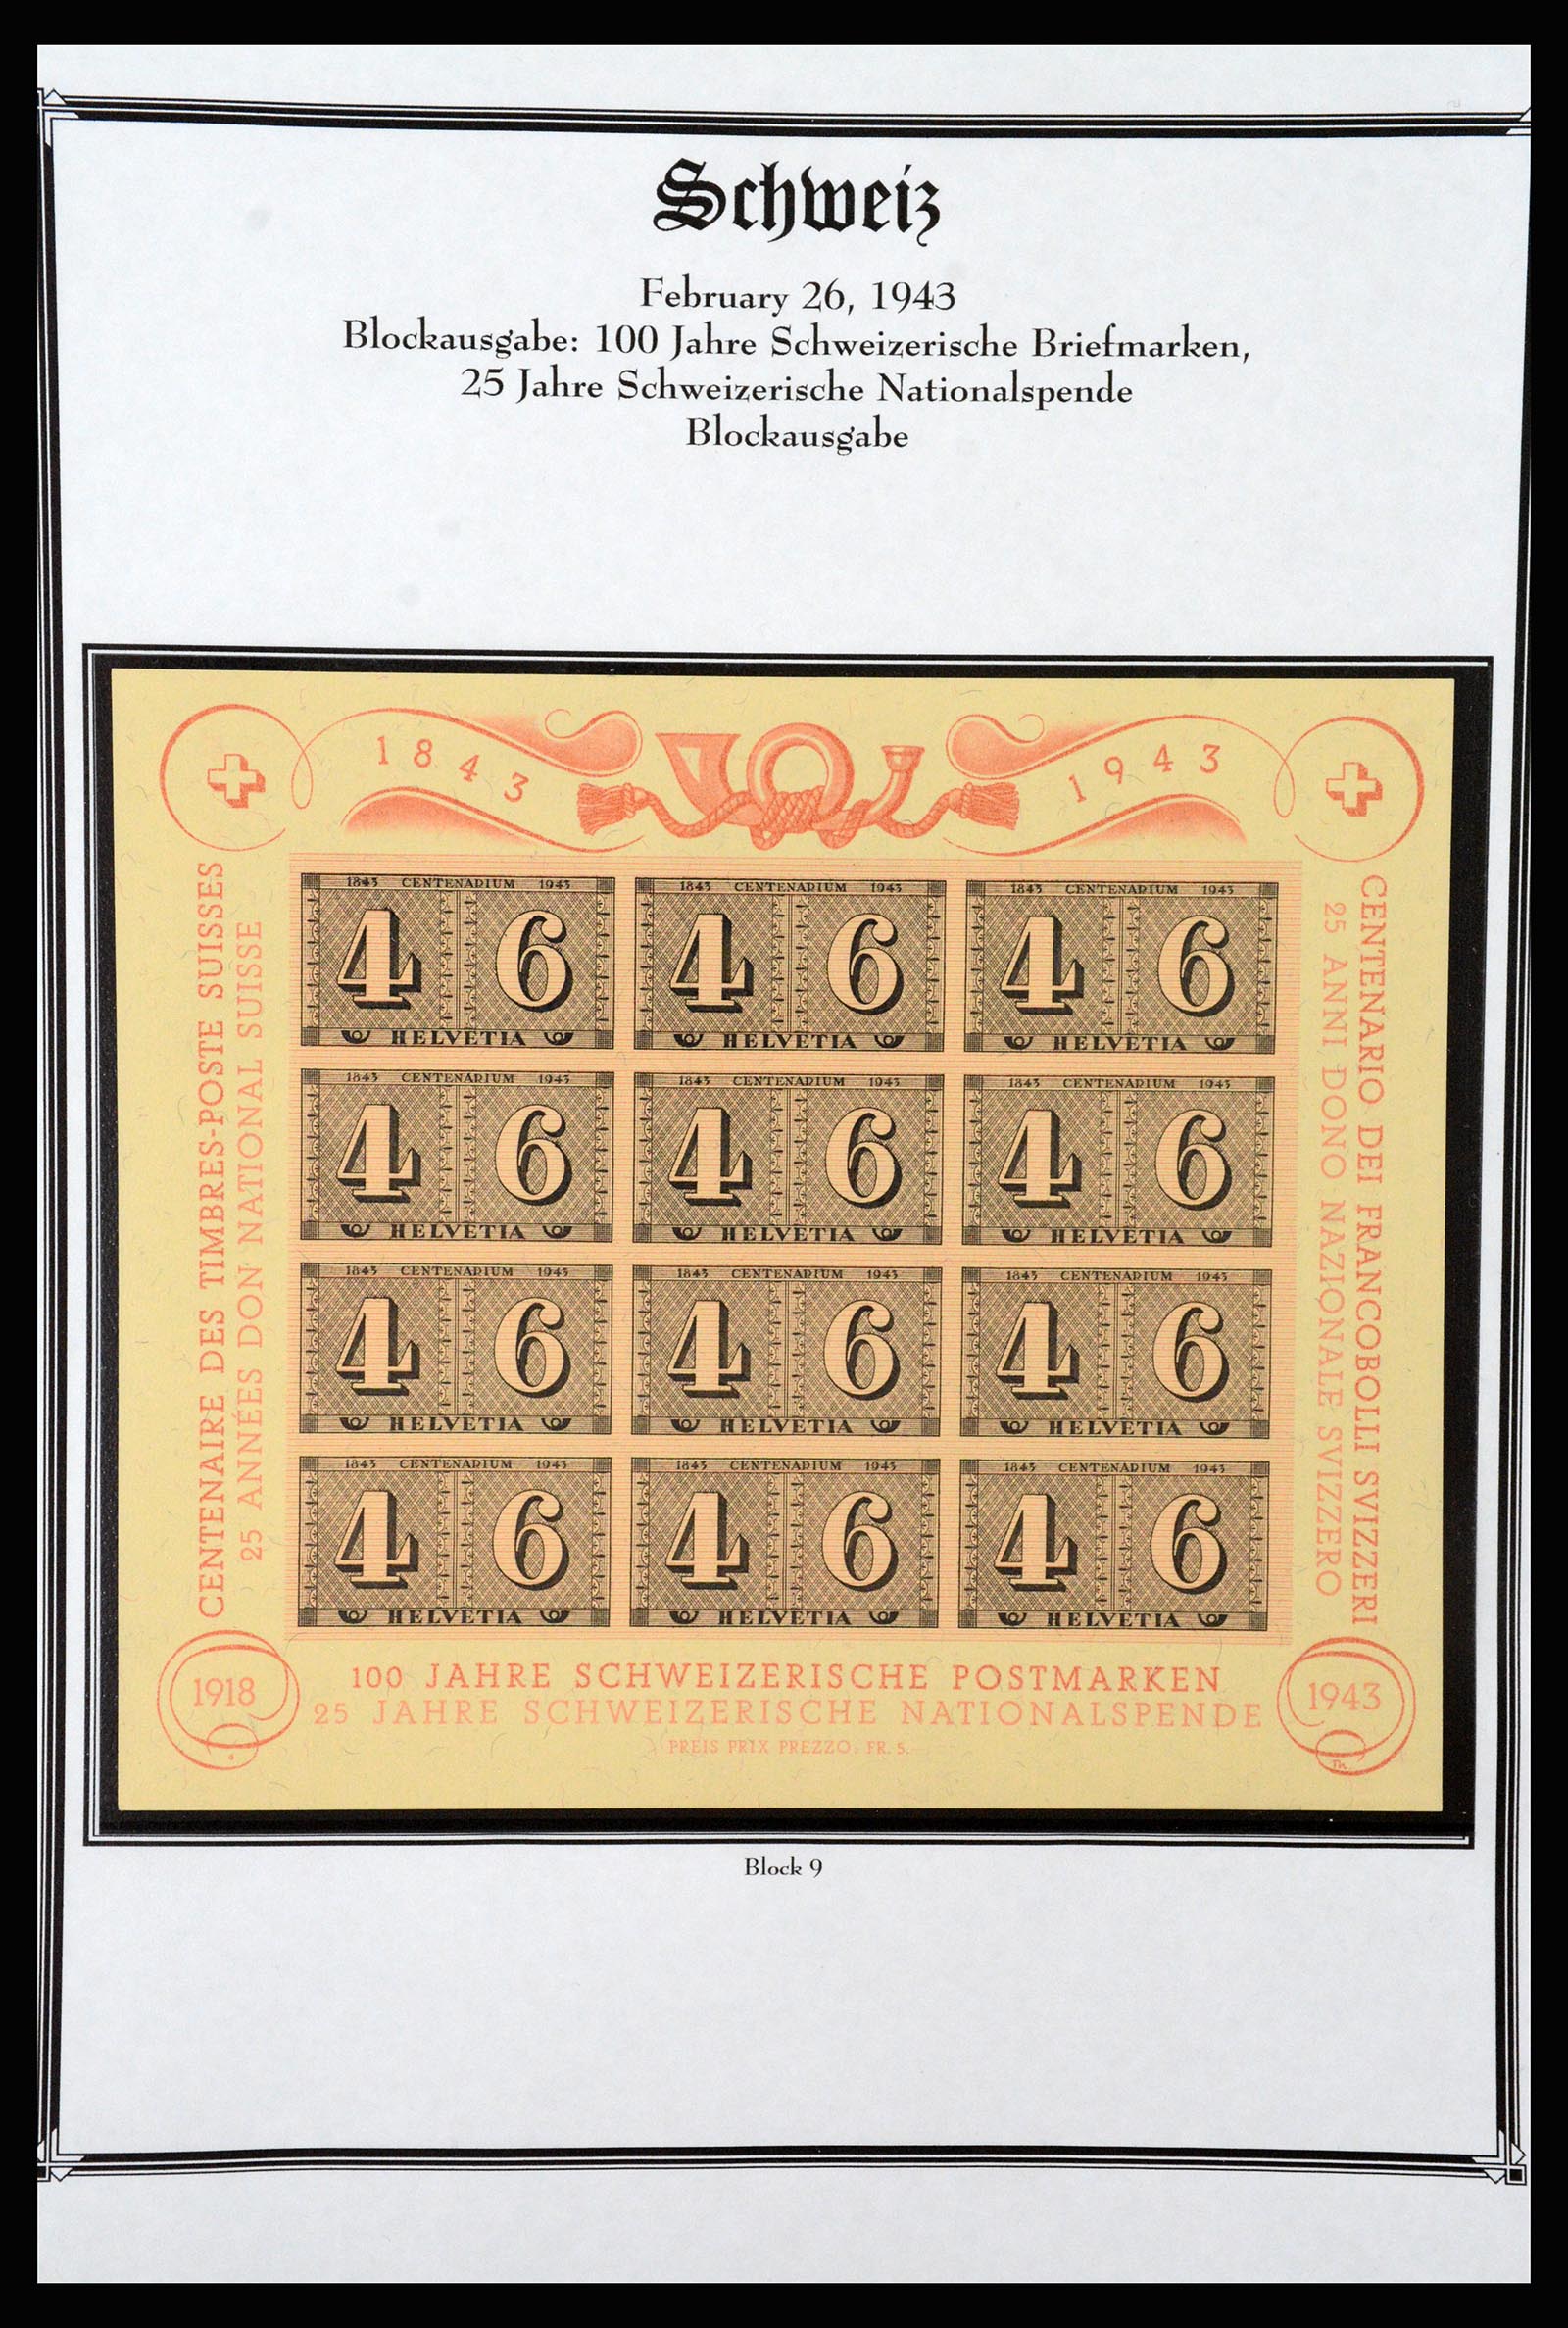 37159 077 - Stamp collection 37159 Switzerland 1862-2000.